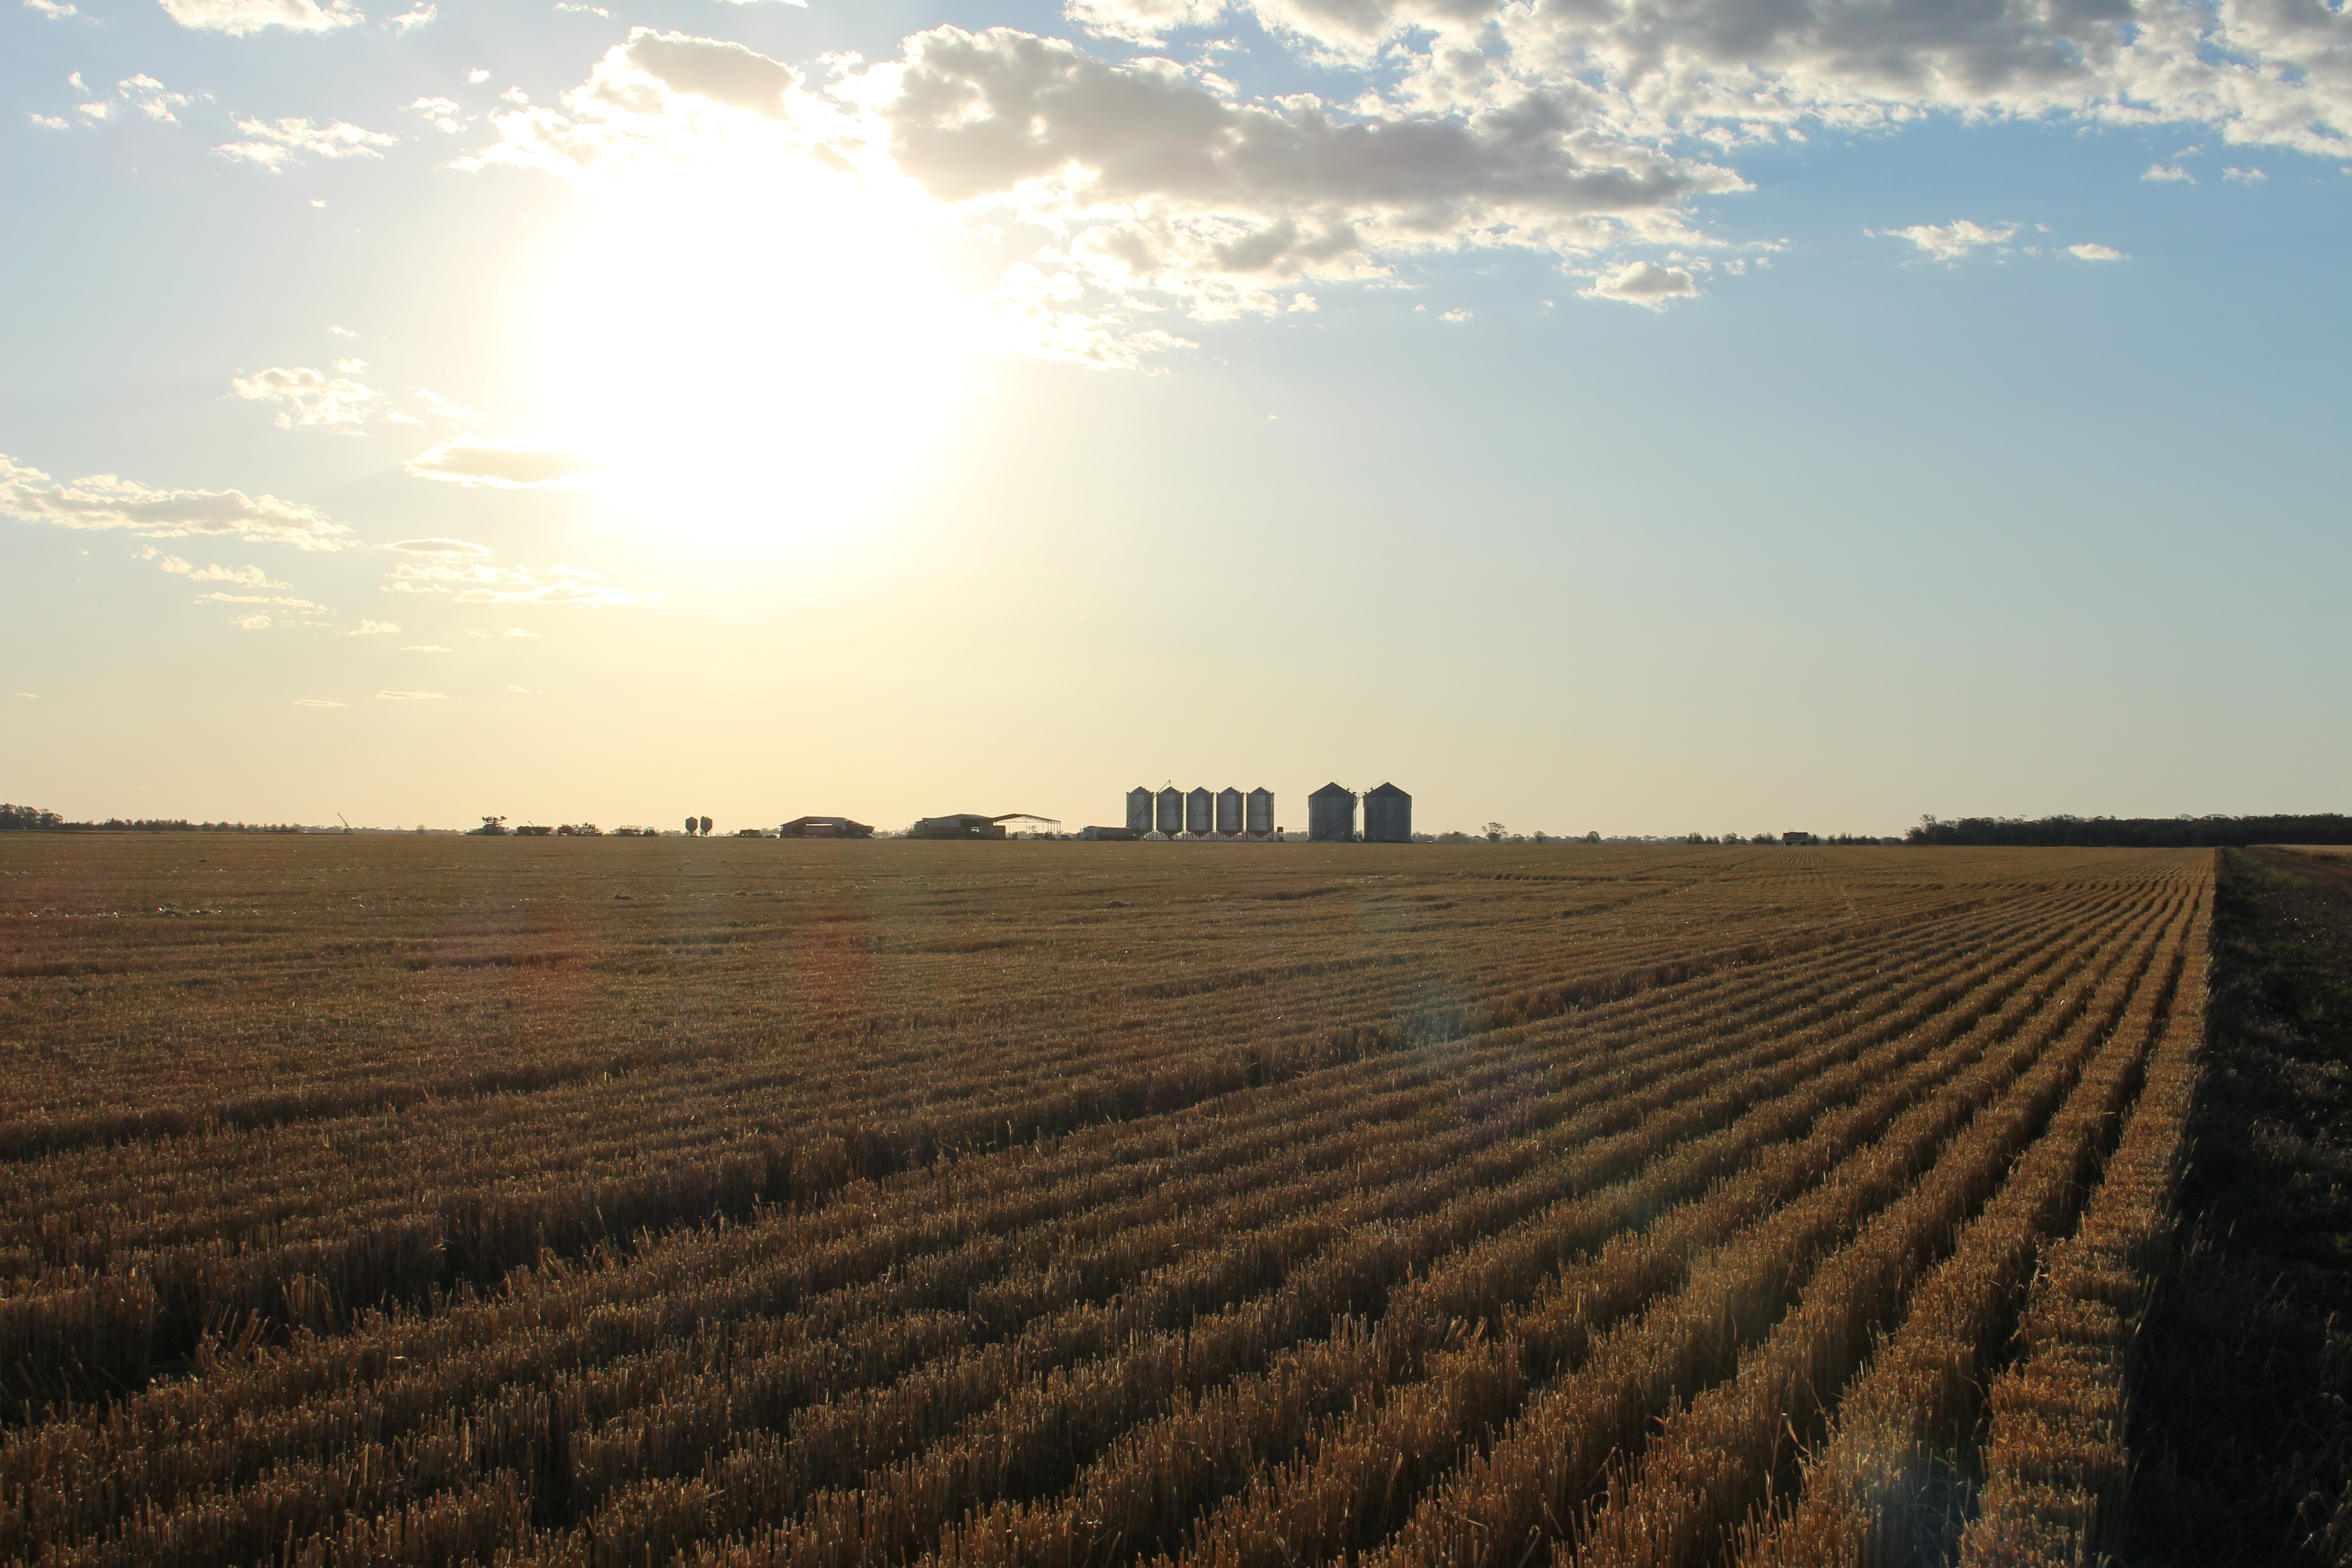 Grain silos are seen on the horizon near Moree